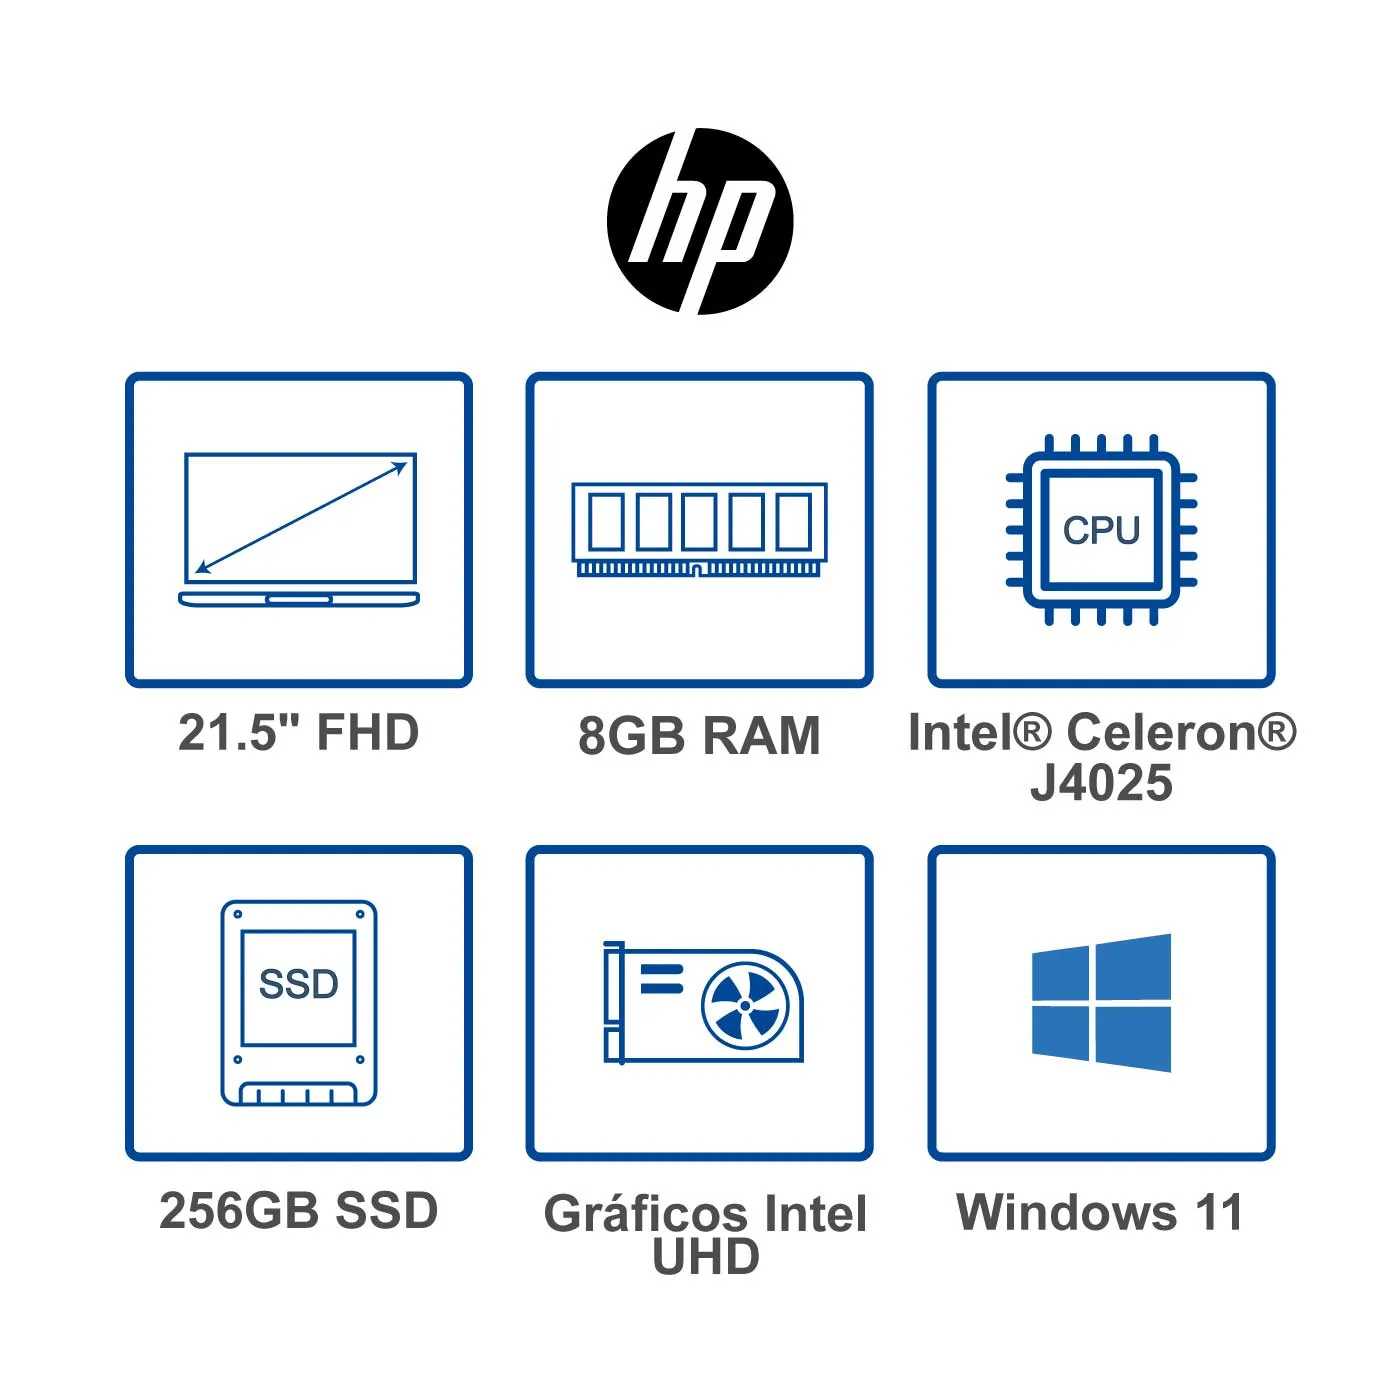 Computador All in One HP 21.5" Pulgadas dd2006la - Intel Celeron - RAM 8GB - Disco SSD 256 GB - Negro